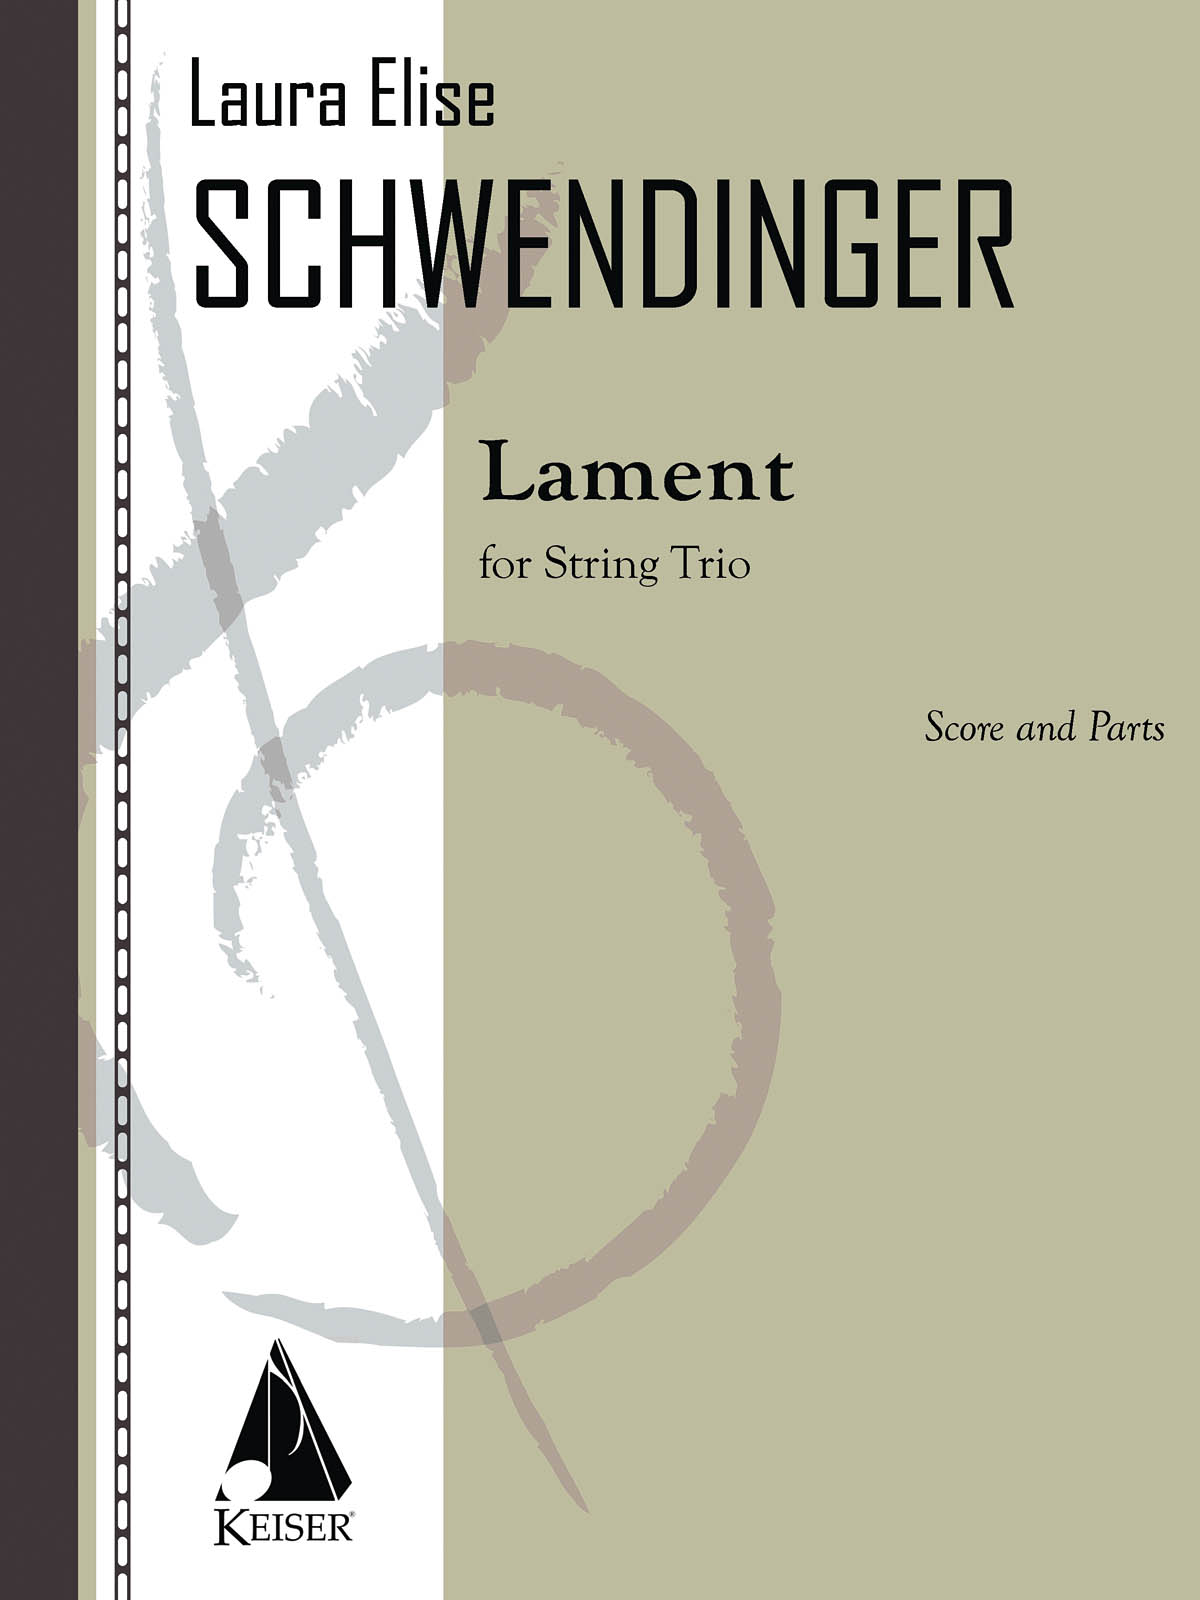 Laura Schwendinger: Lament for String Trio - Score and Parts